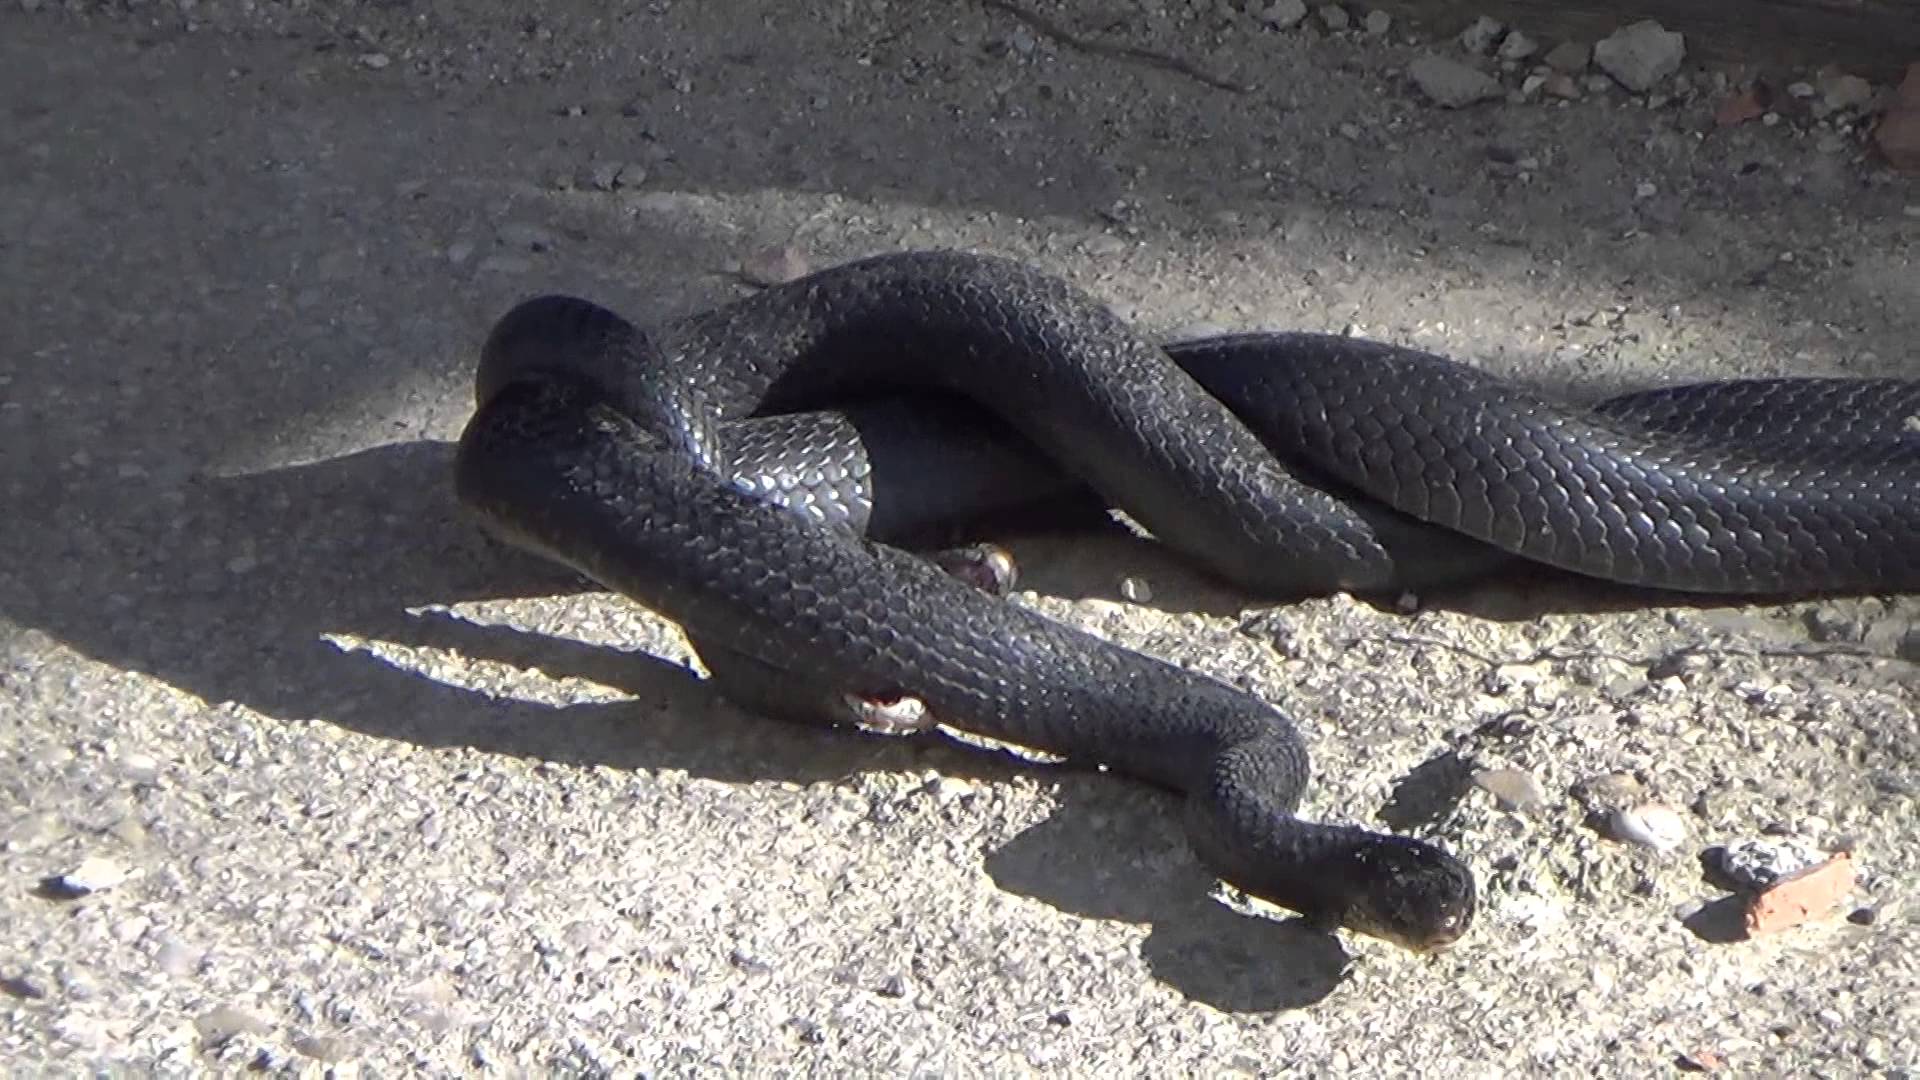 Black snakes in Abruzzo Italy - YouTube